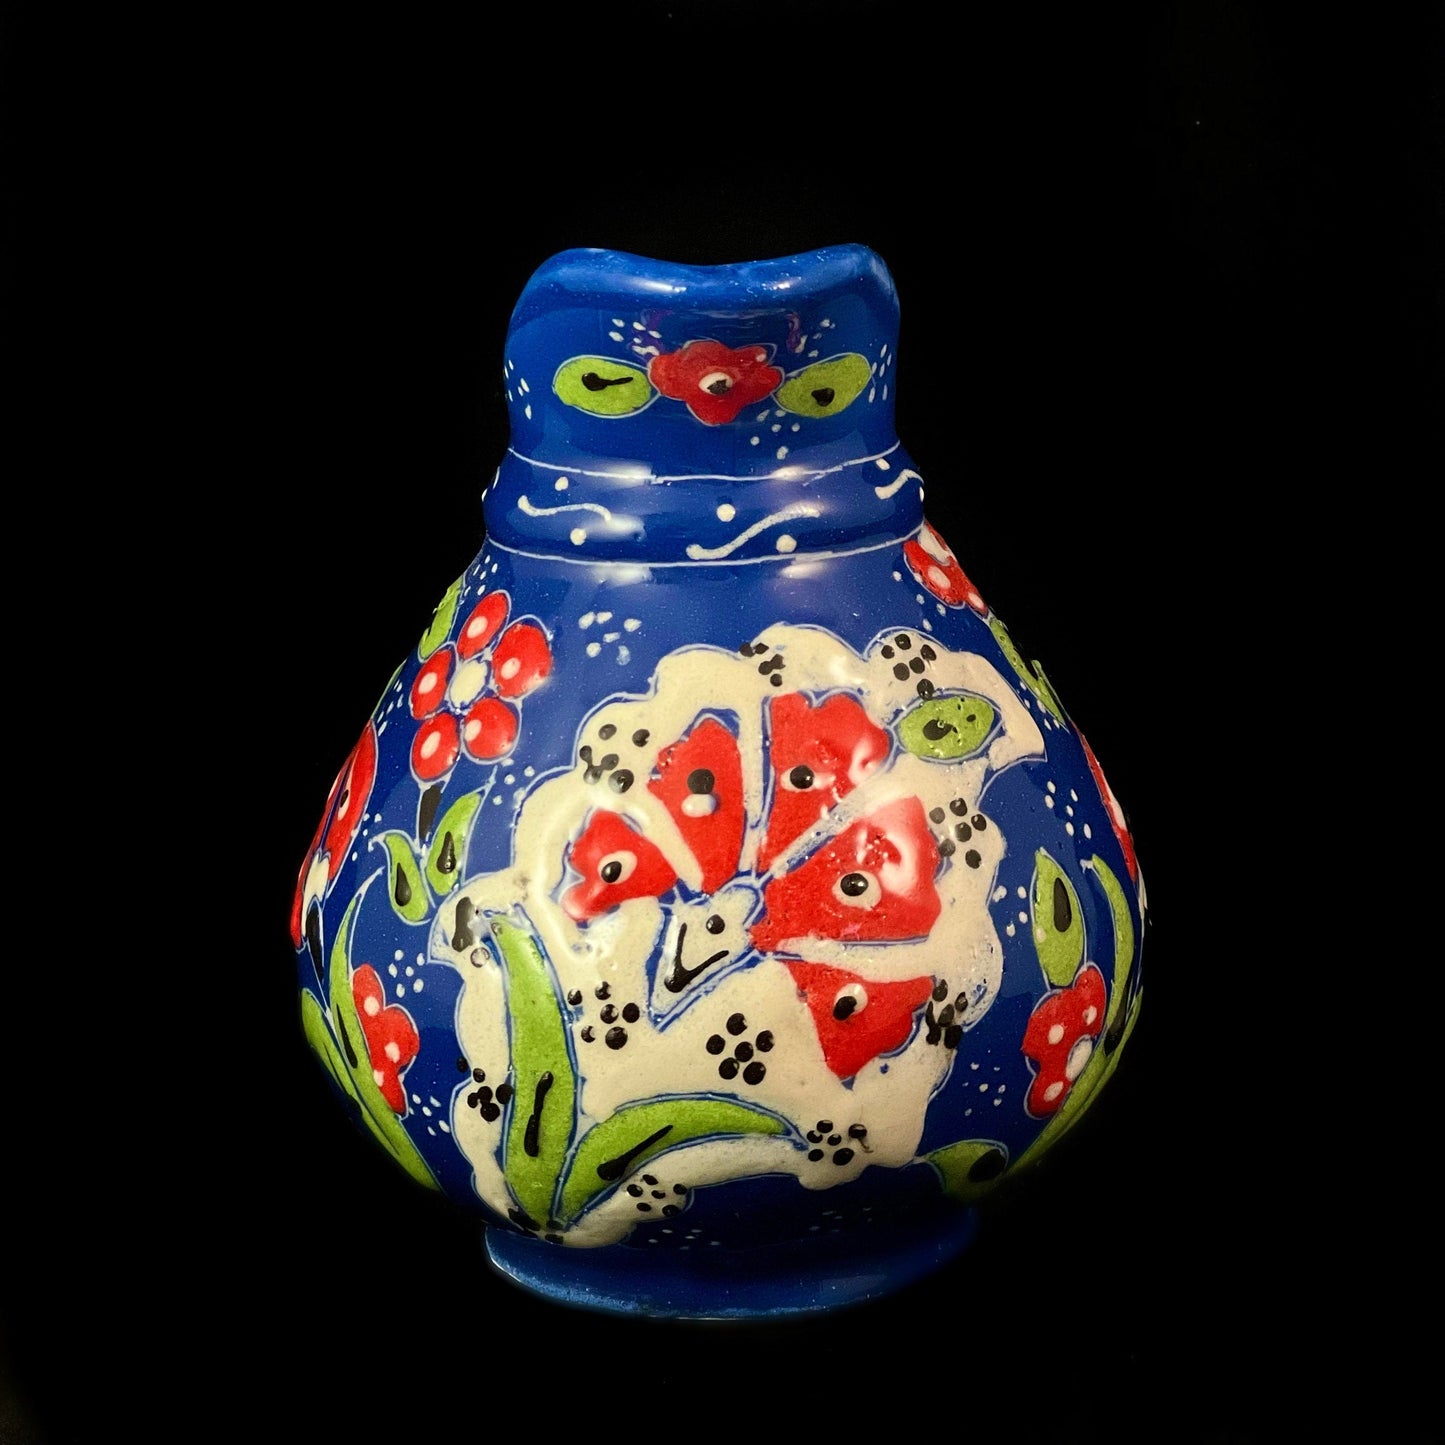 Handmade Creamer, Functional and Decorative Turkish Pottery, Cottagecore Style, Blue